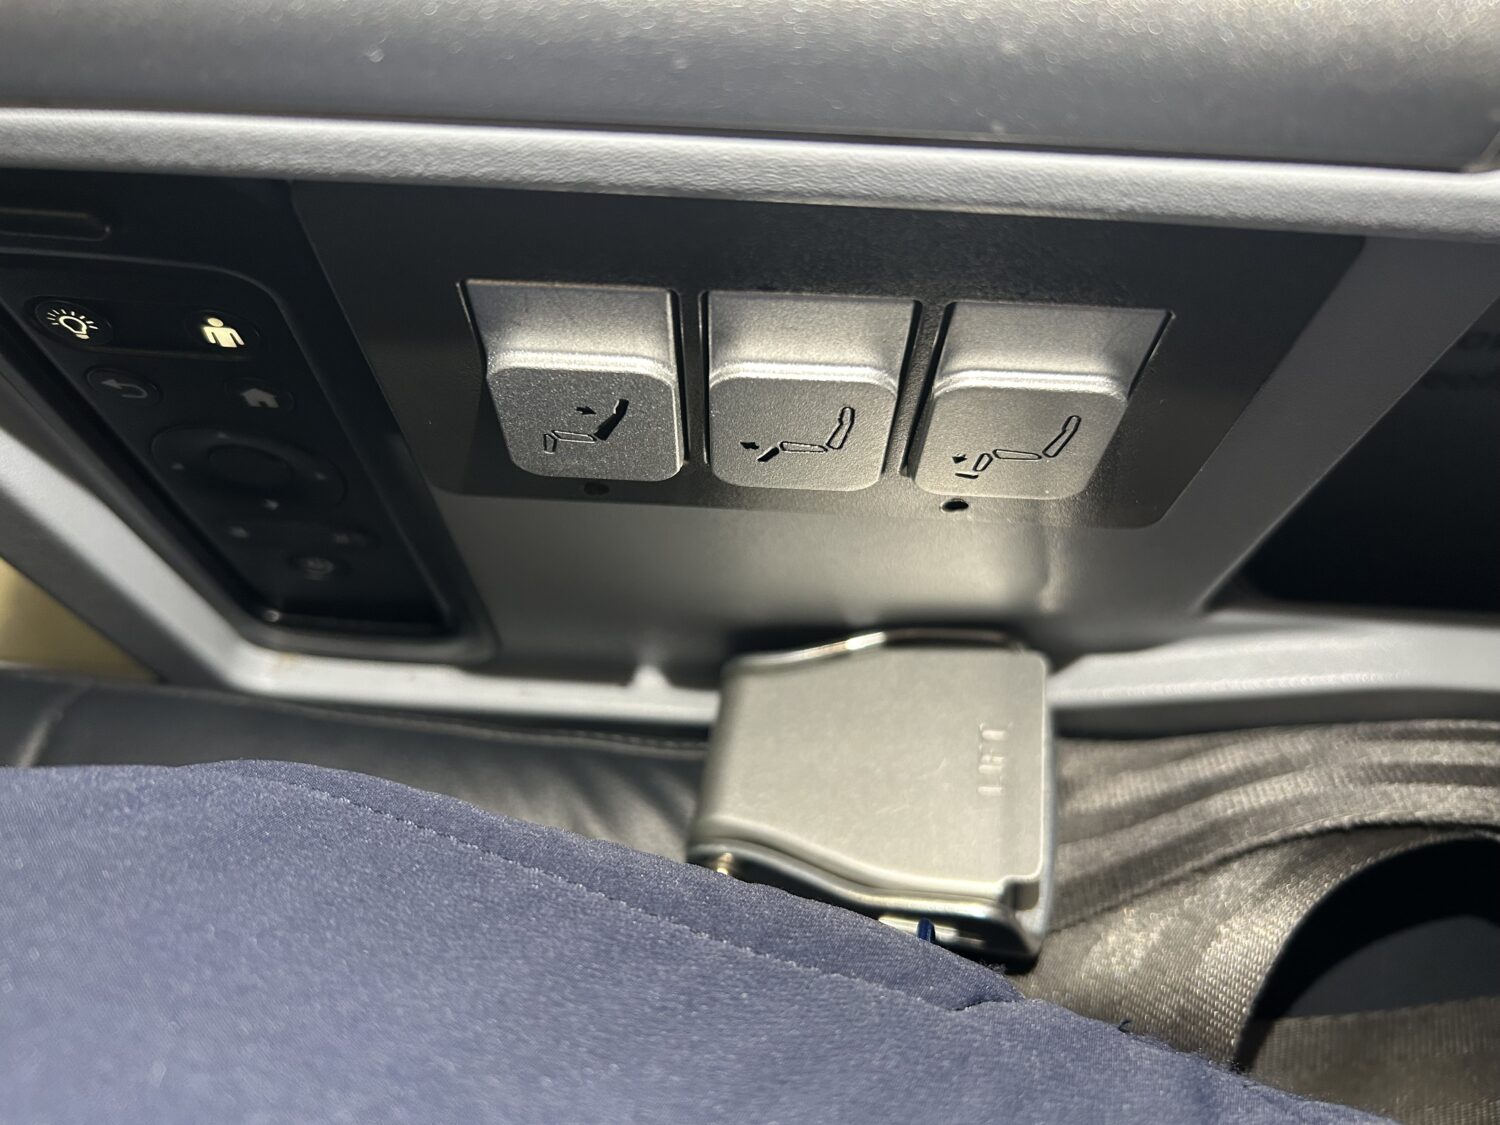 Seat controls on Delta Premium Select